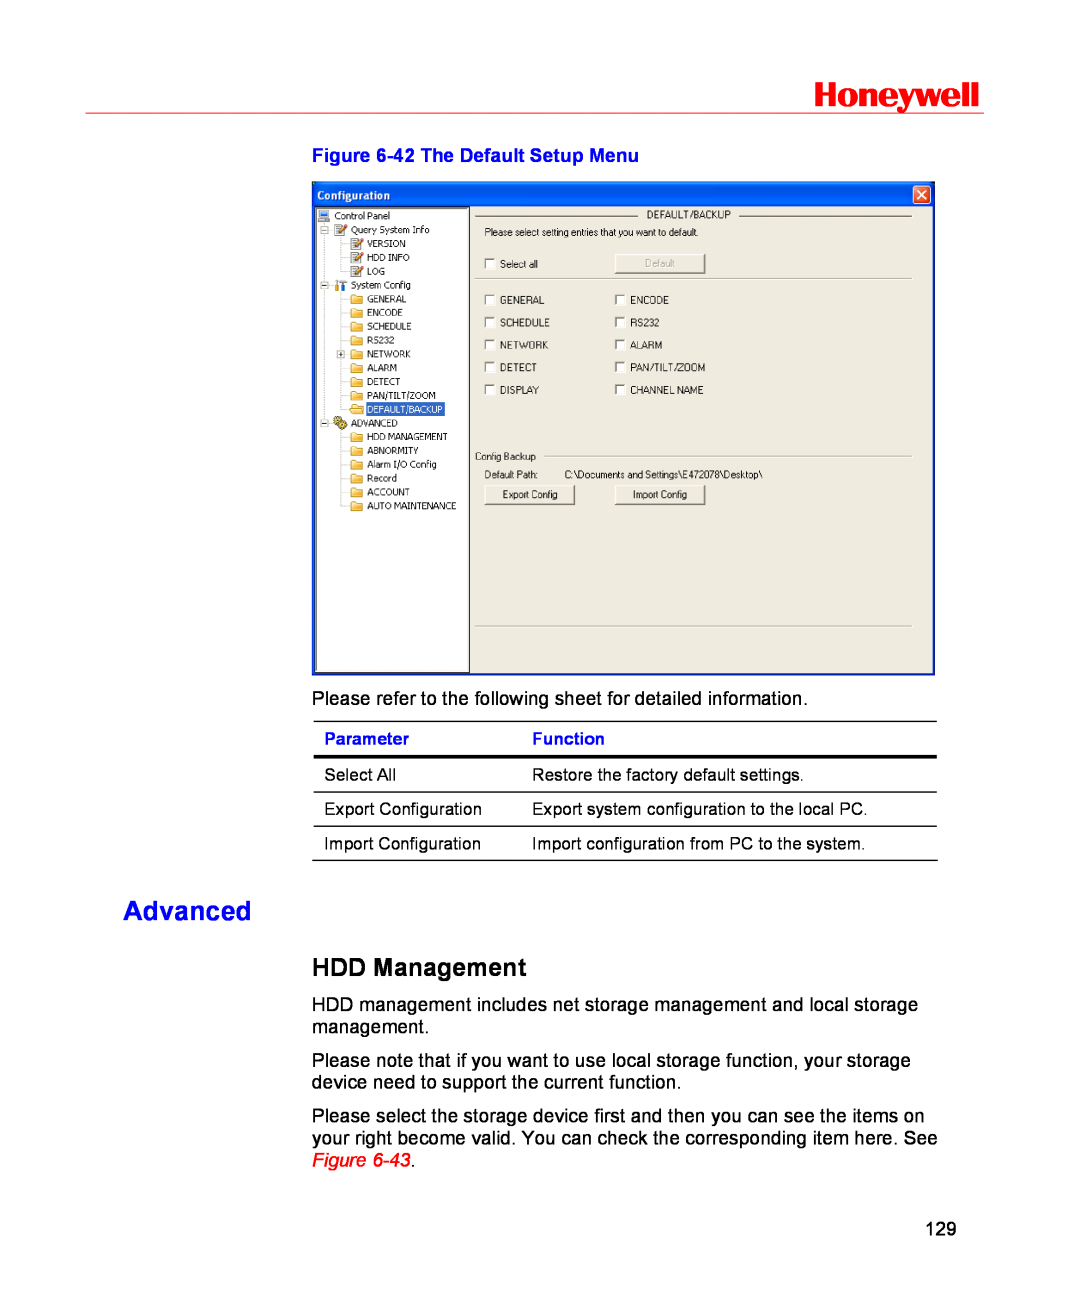 Honeywell HSVR-16, HSVR-04 user manual Advanced, HDD Management, Honeywell, 42 The Default Setup Menu 